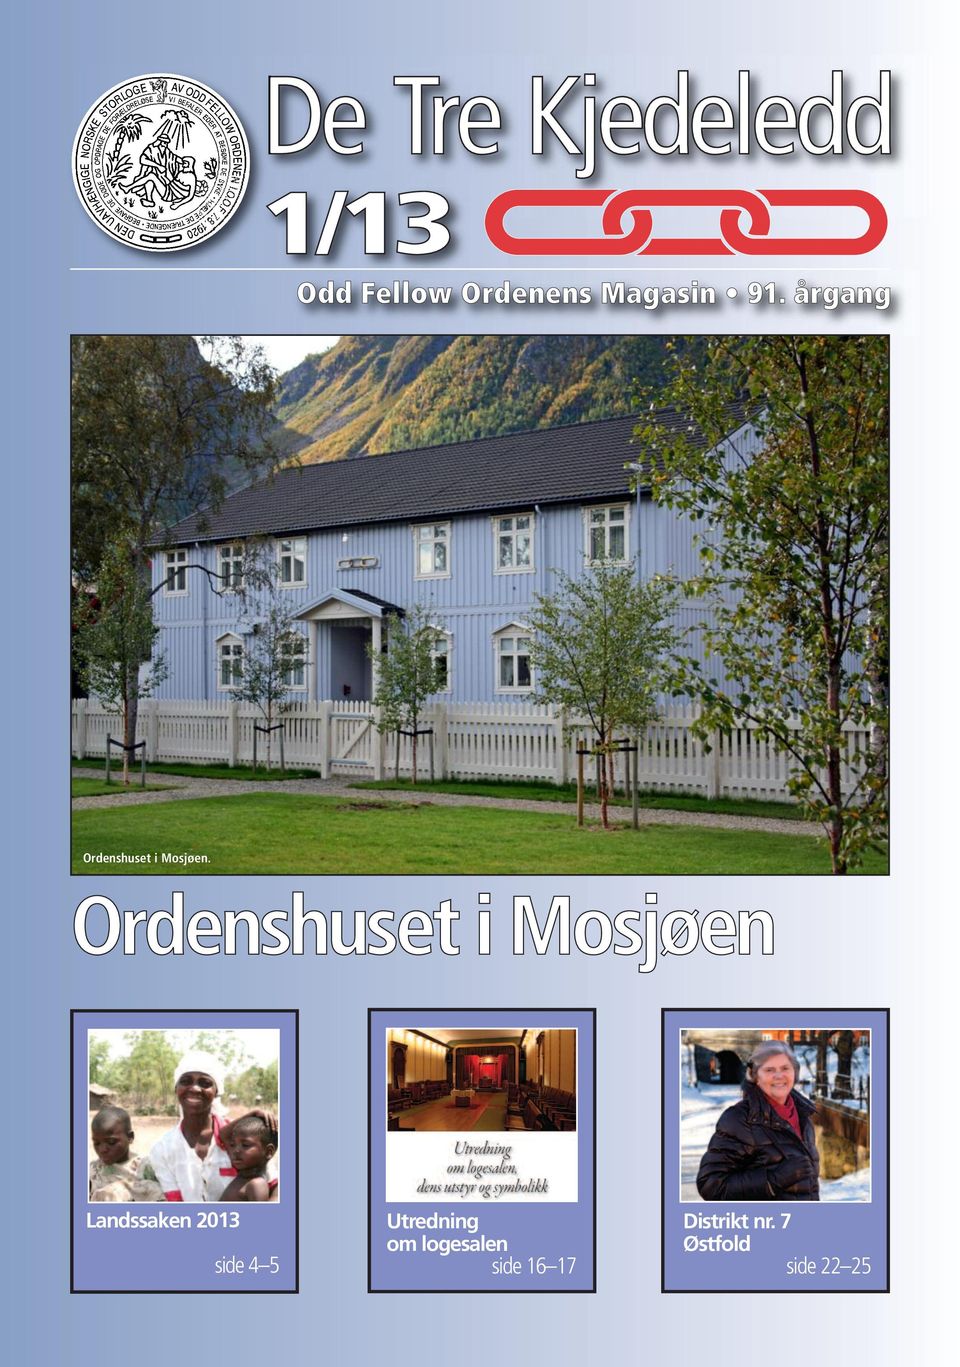 Ordenshuset i Mosjøen Landssaken 2013 side